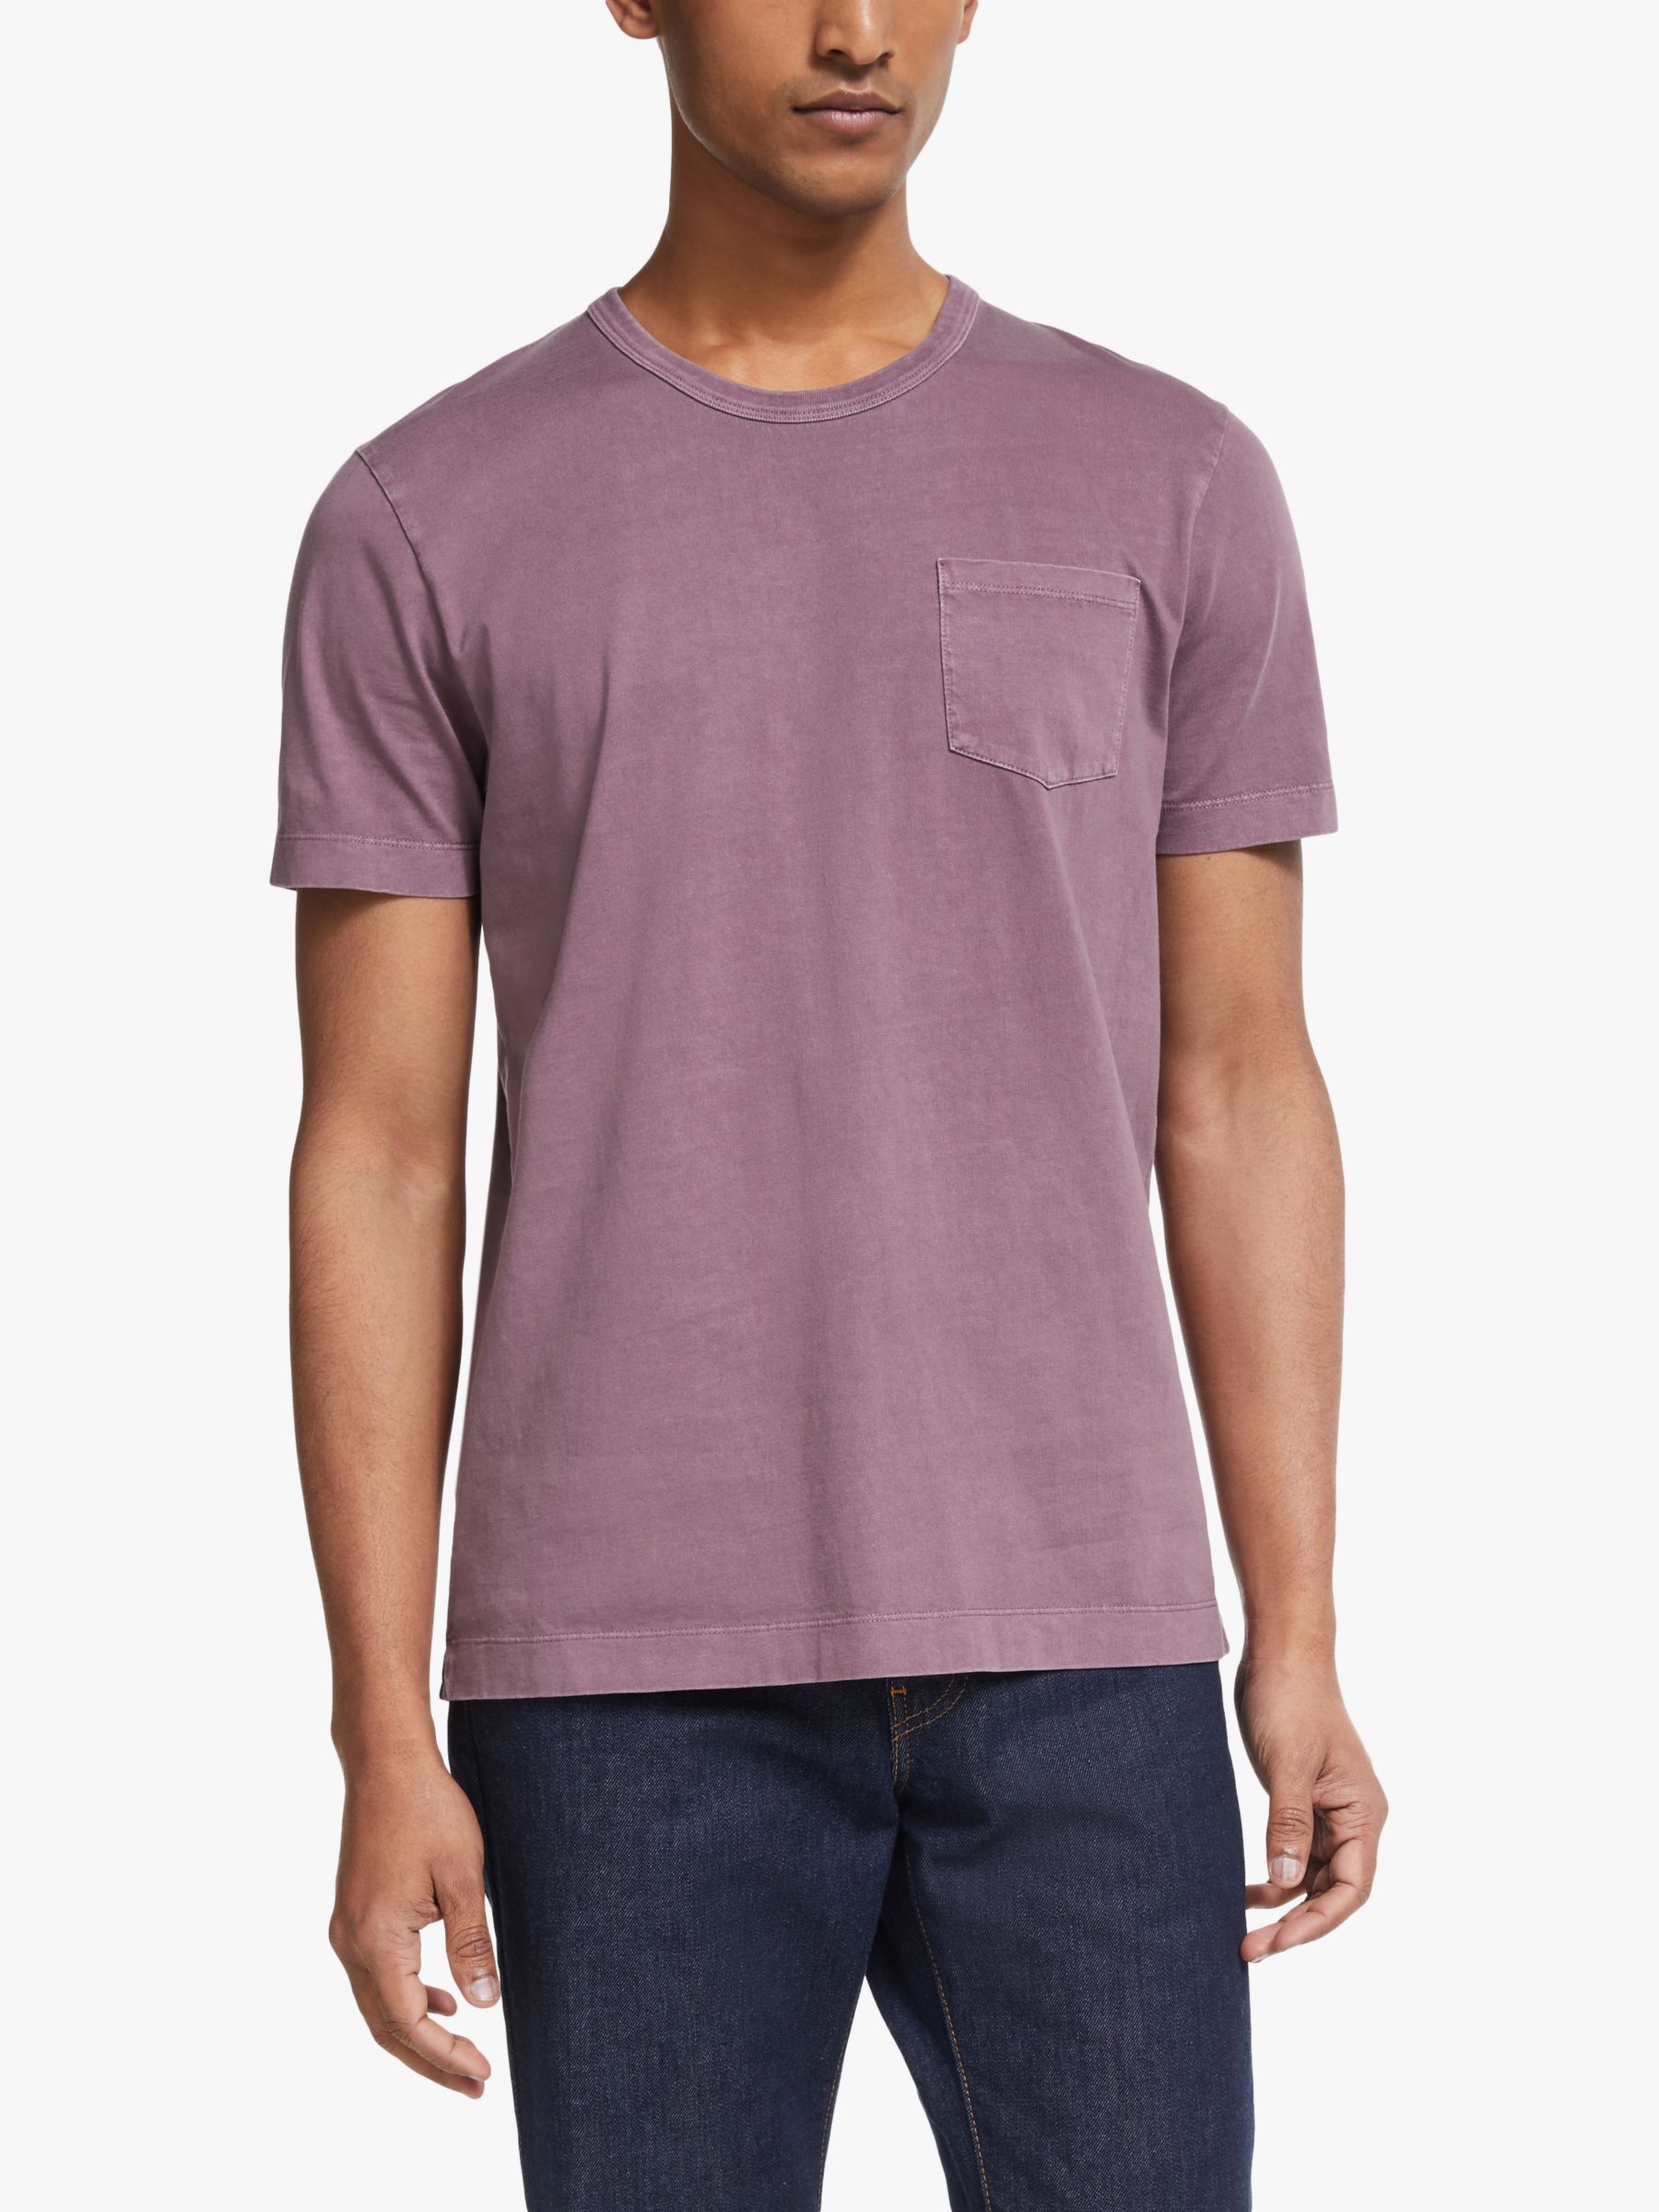 John Lewis & Partners Garment Dye Short Sleeve Pocket T-Shirt